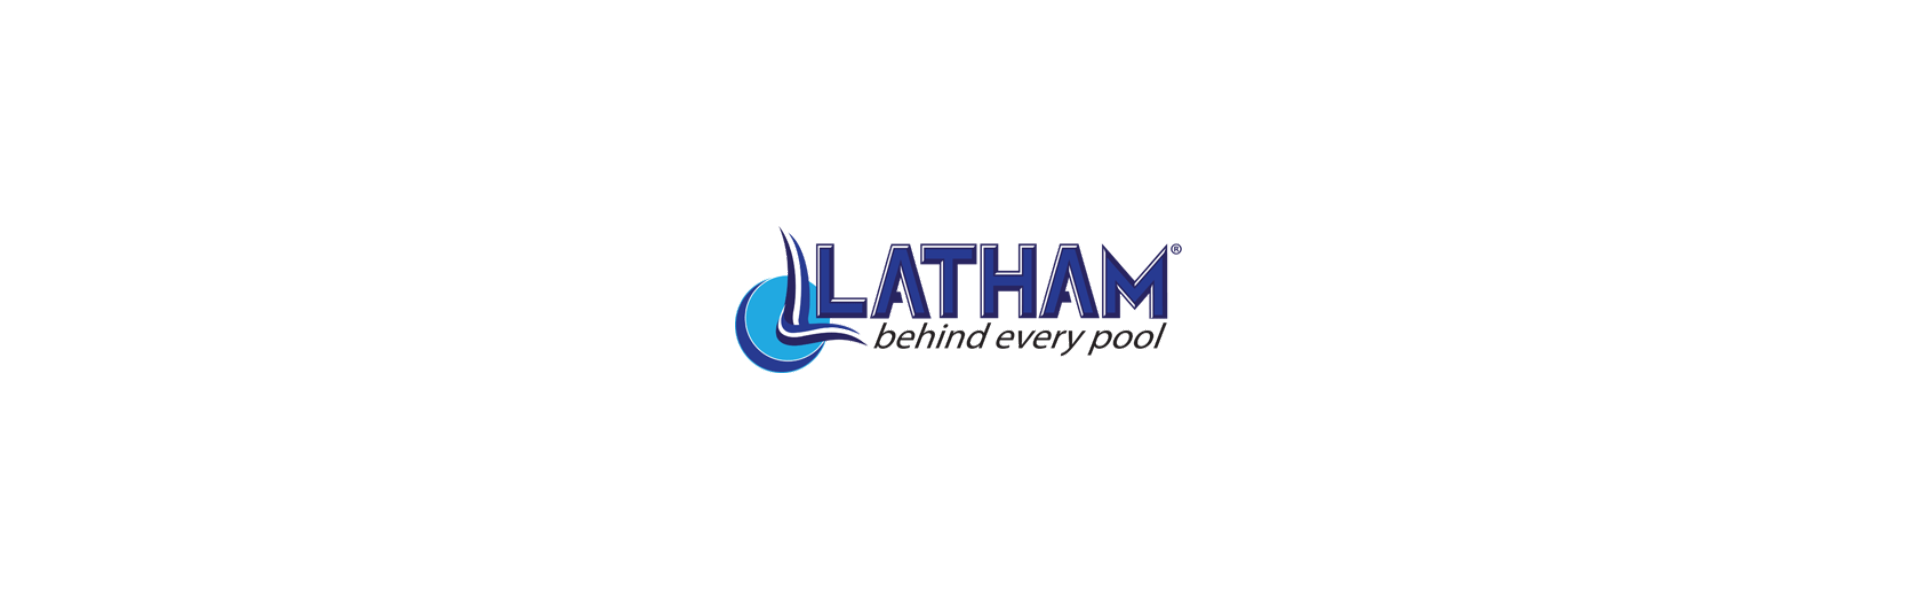 latham-title-logo